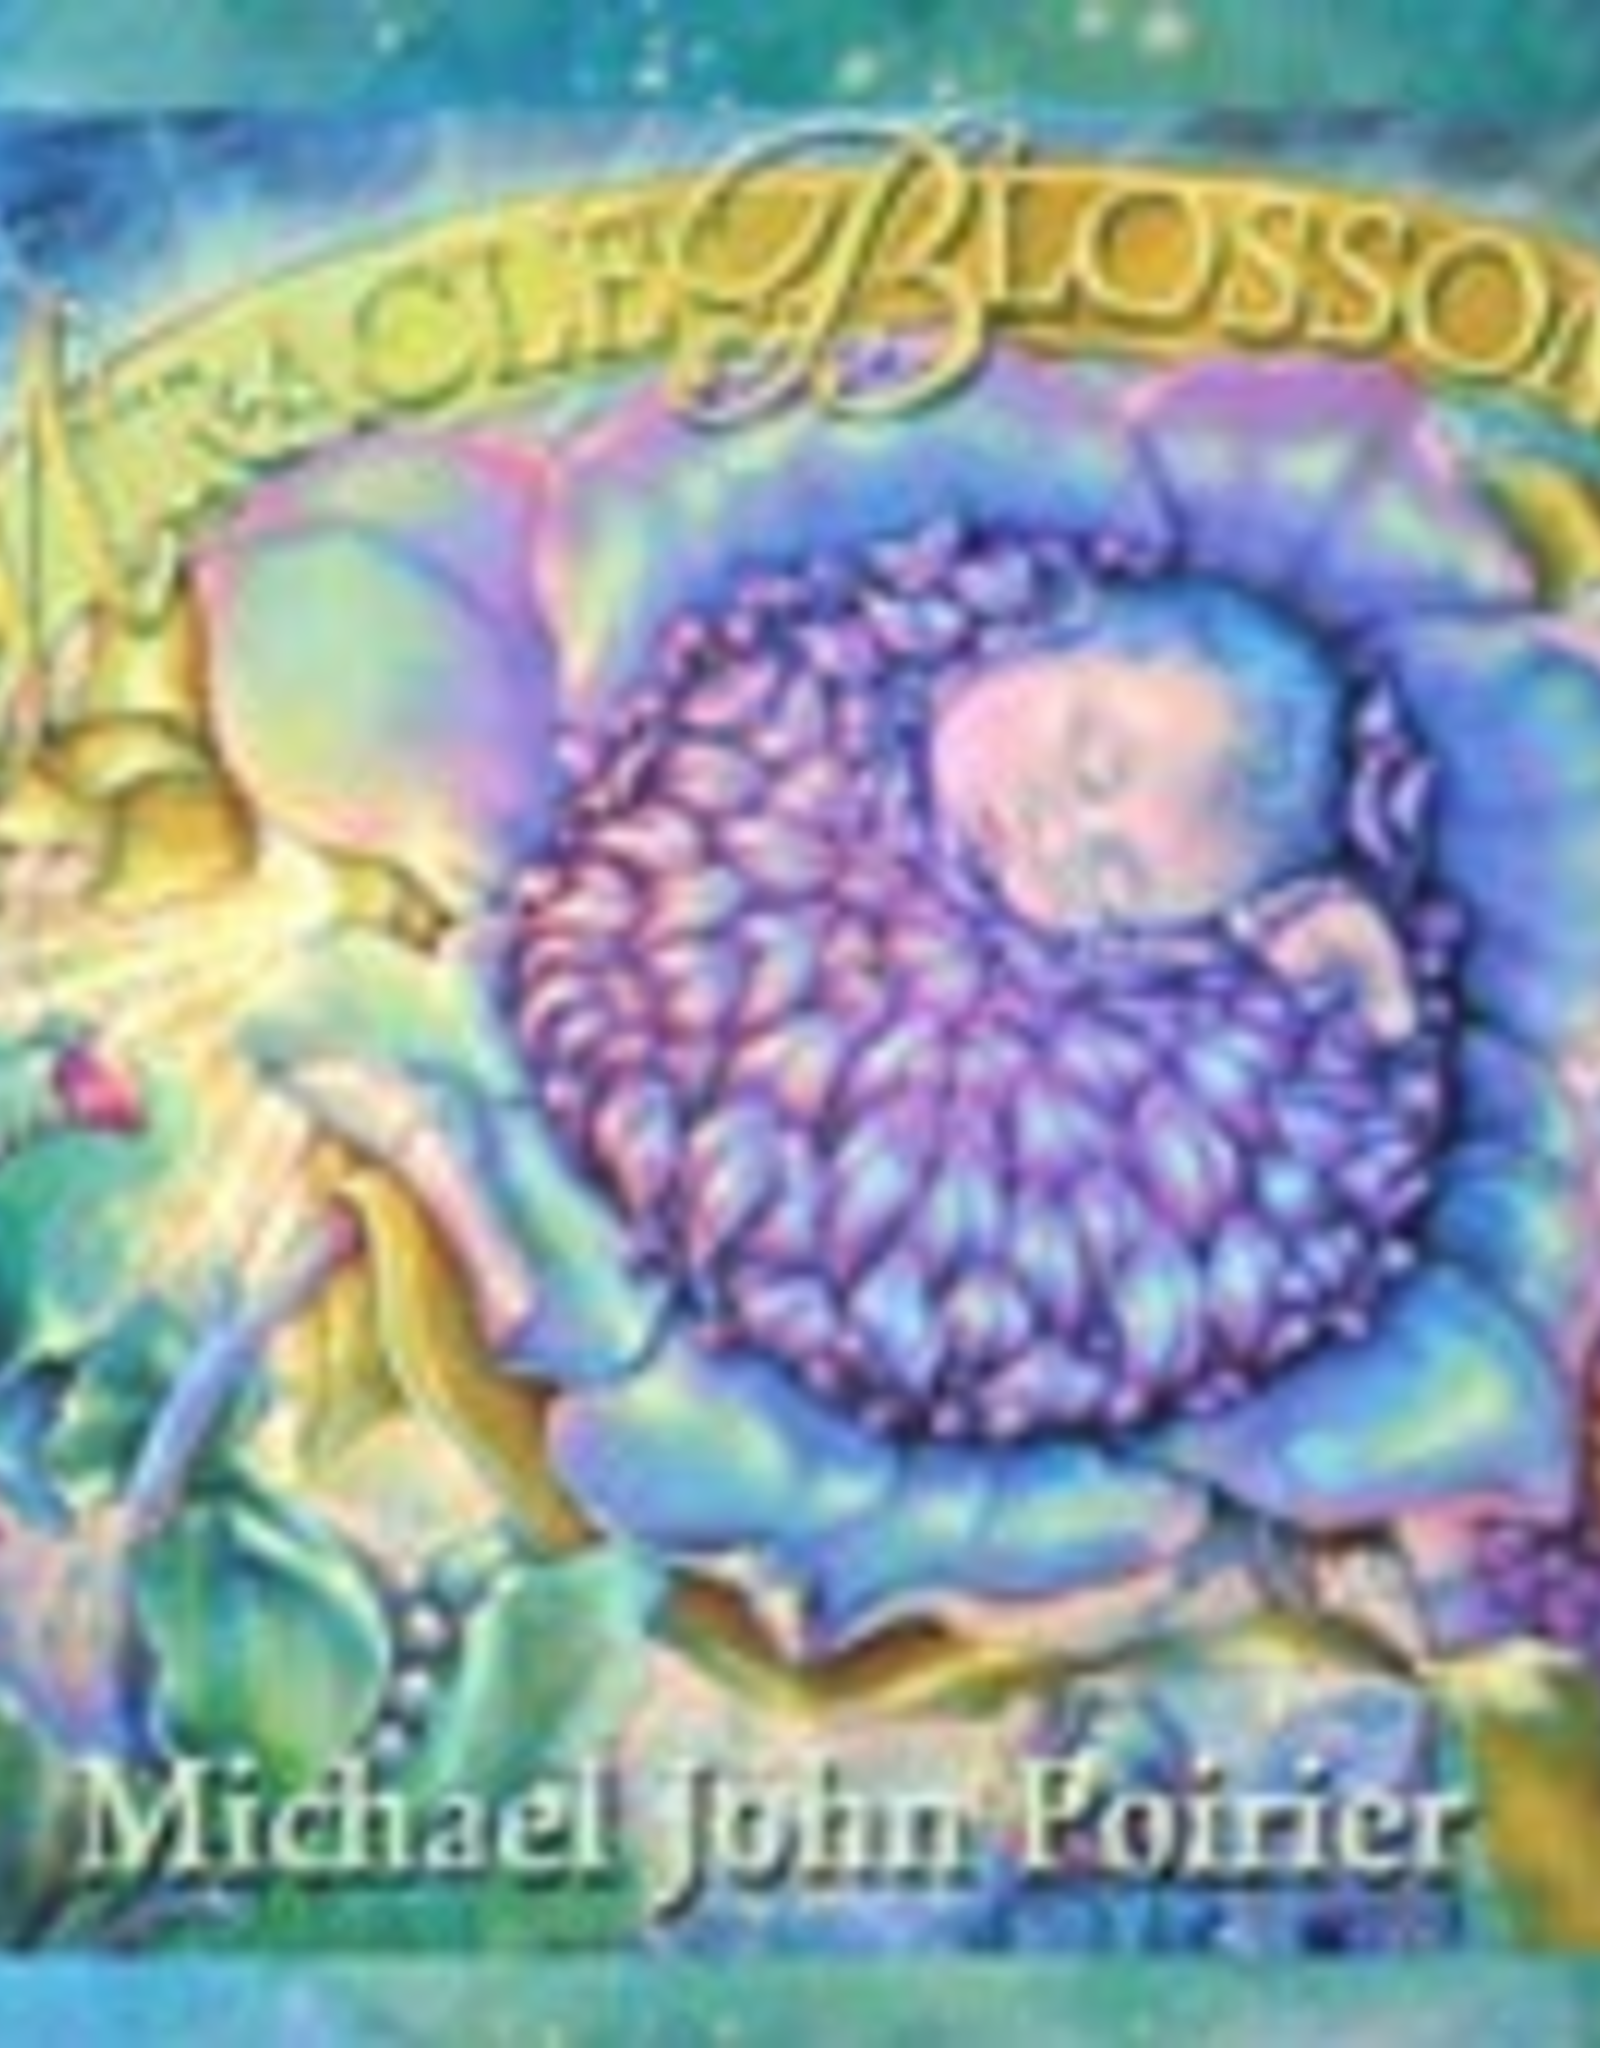 Michael John Poirier Miracle Blossom, by Michael John Pourier (CD)